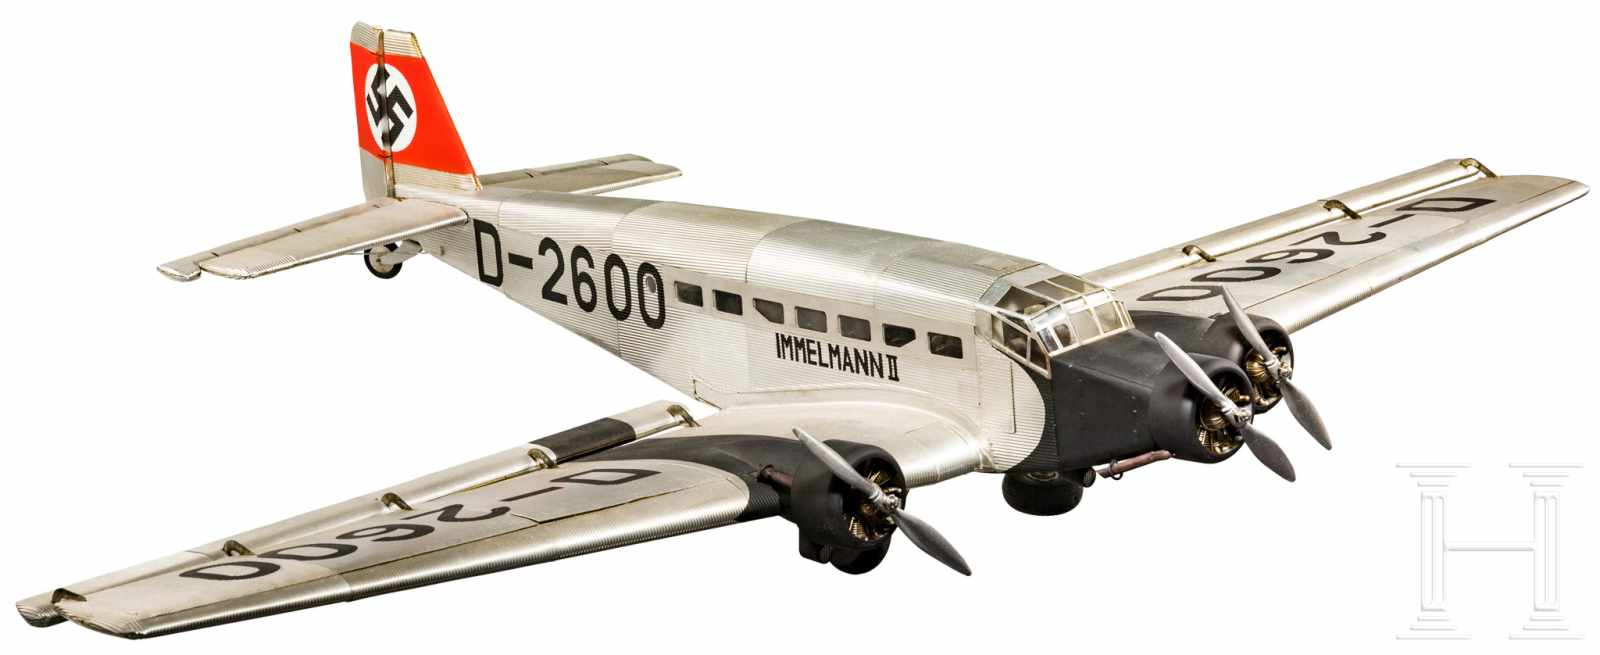 Modell der Junkers Ju 52/3mfe D-2600 Immelmann II, Hitlers PrivatmaschineDetailliertes